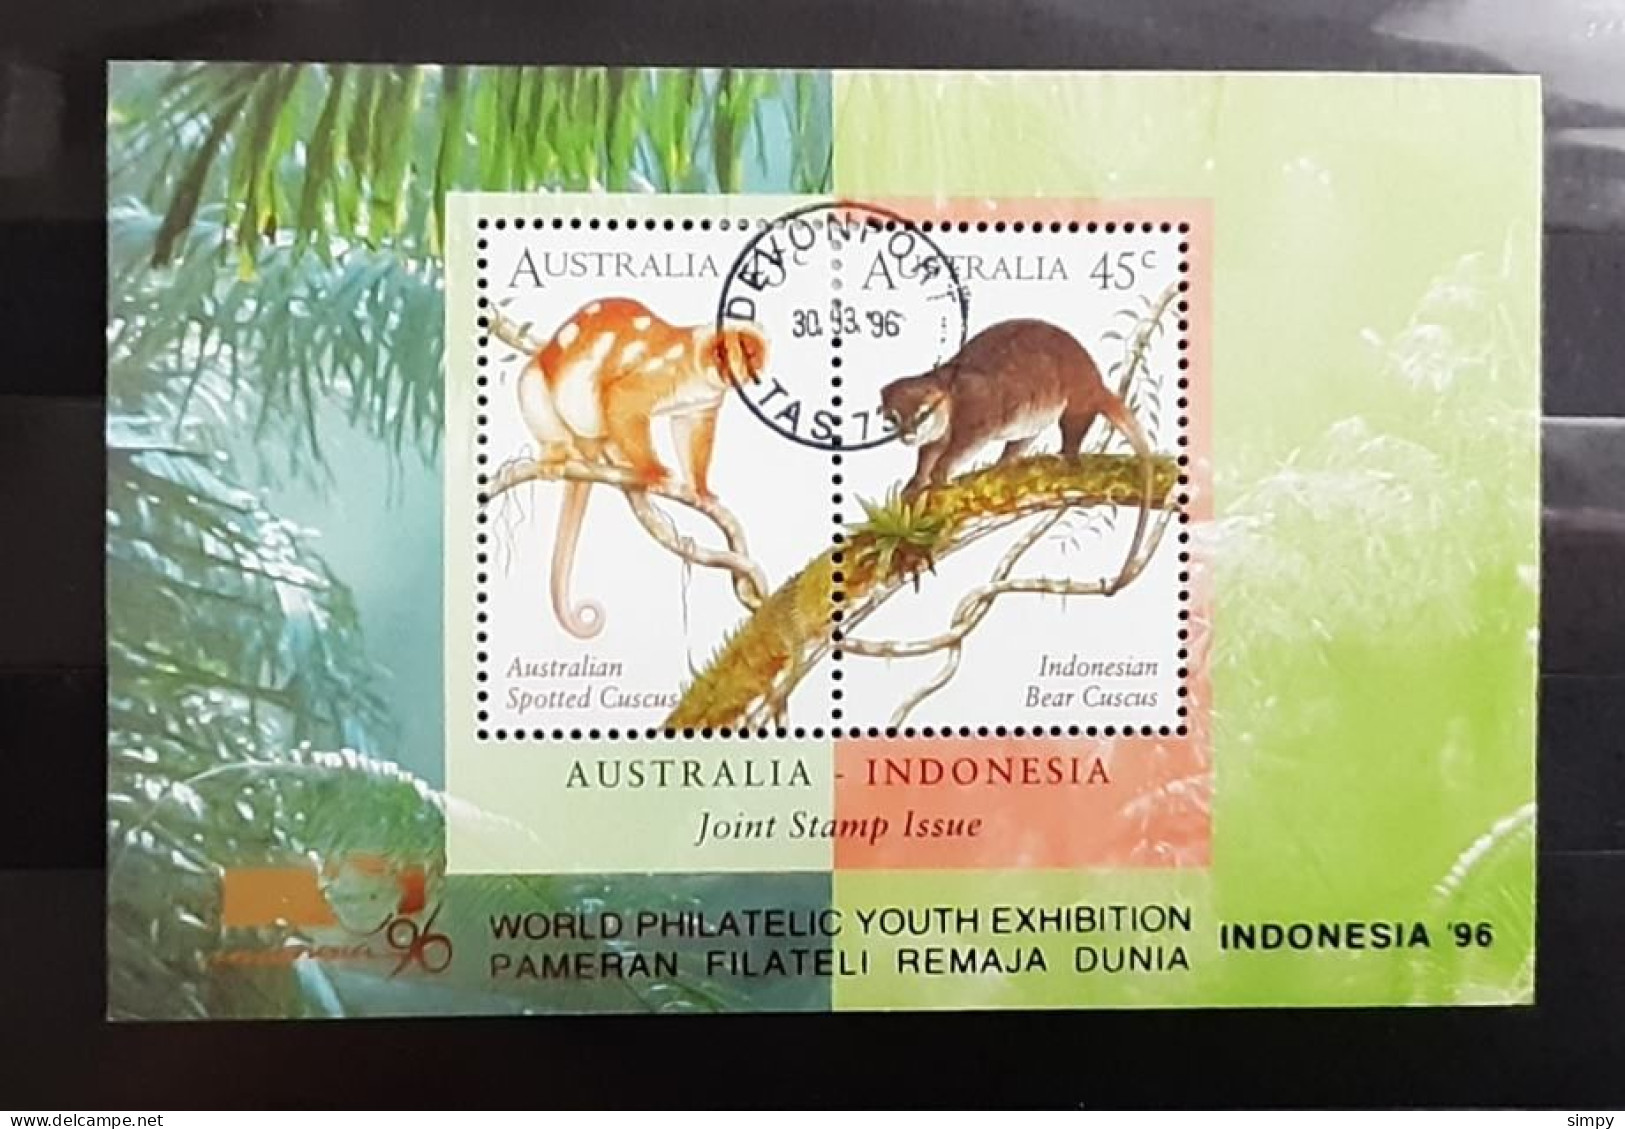 AUSTRALIA 1996 Cuscus Stamp Show Exhibition Indonesia Used Mini Sheet Block - Blocks & Sheetlets